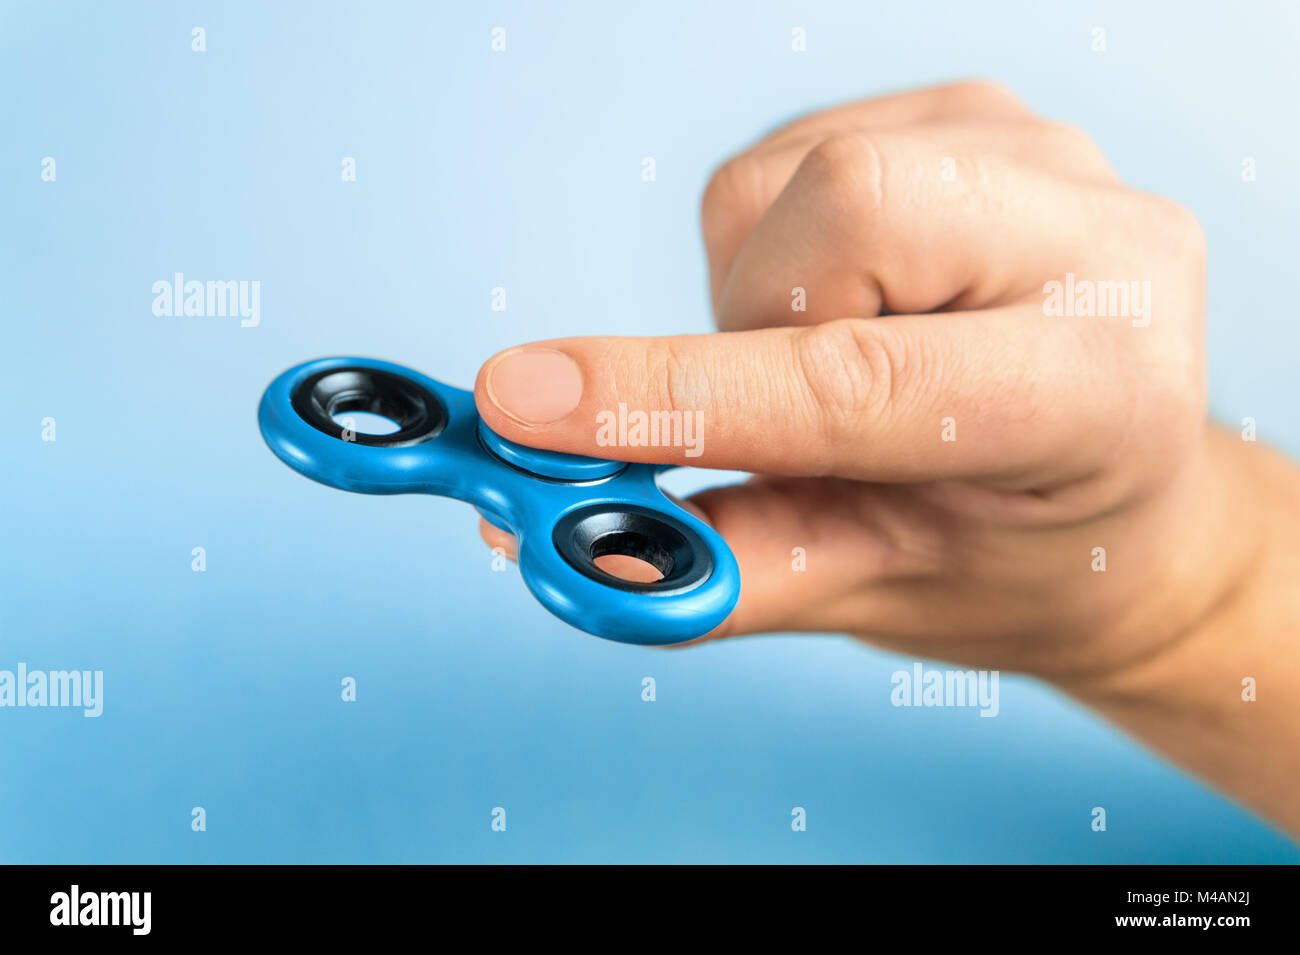 Blue fidget spinner between fingers Stock Photo